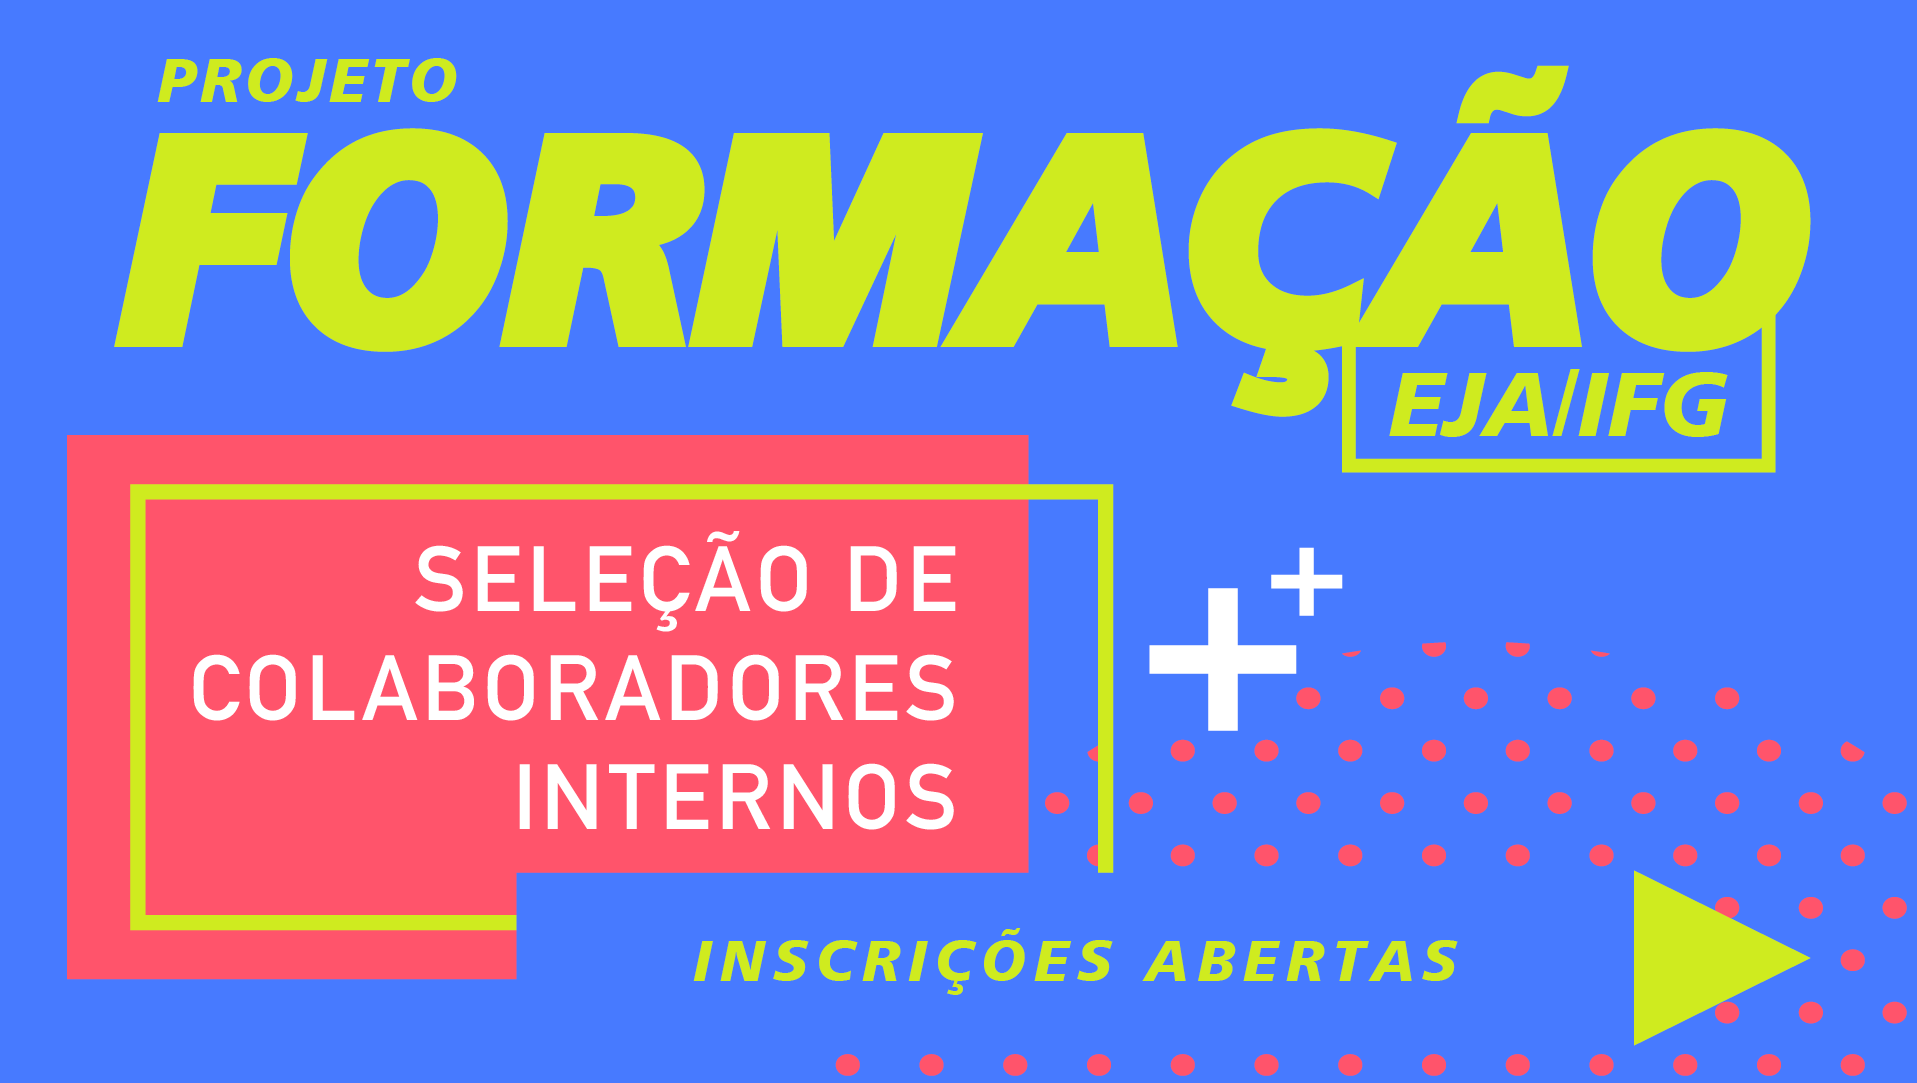 FORMACAO-Destaque-Inscricoes.png - 94.06 kb